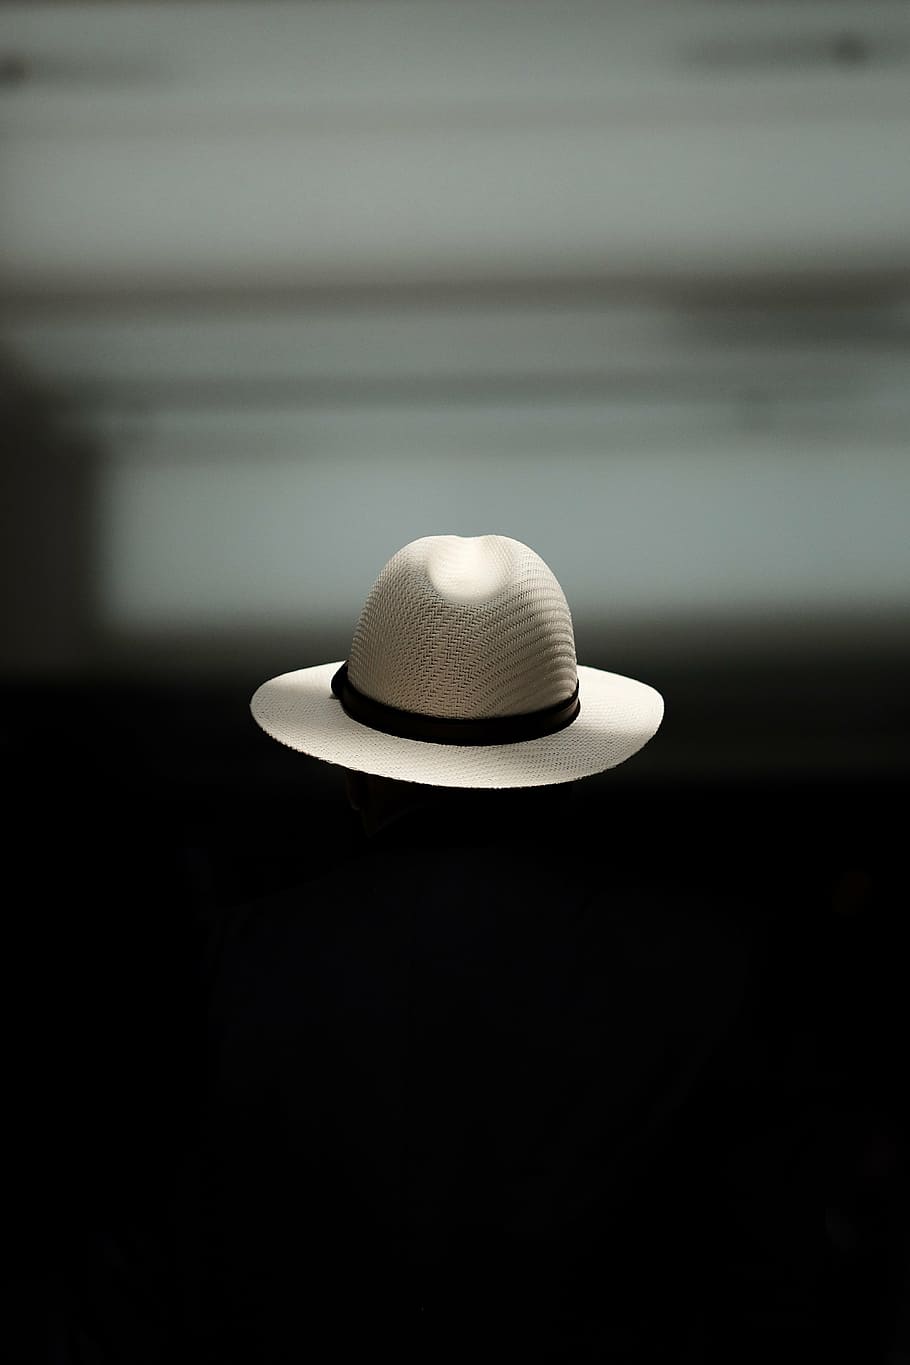 sombrero, negro, fondo de pantalla, gente, oscuro, habitación, gorra, moda, en interiores, sin gente